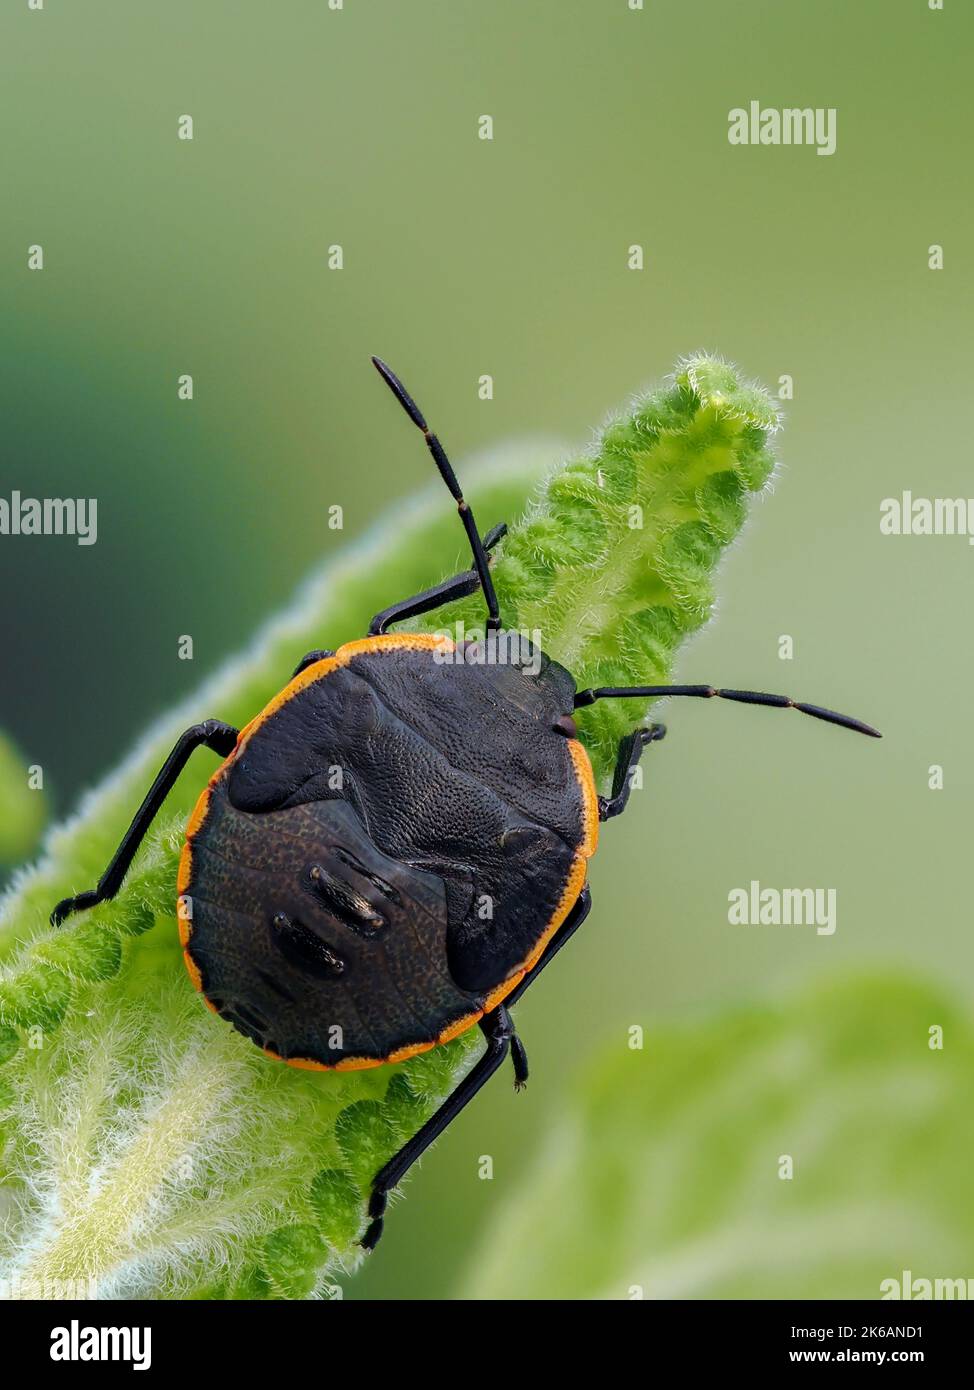 dorsal view of an immature conchuela bug, Chlorochroa ligata, showing its striking black and orange coloration Stock Photo